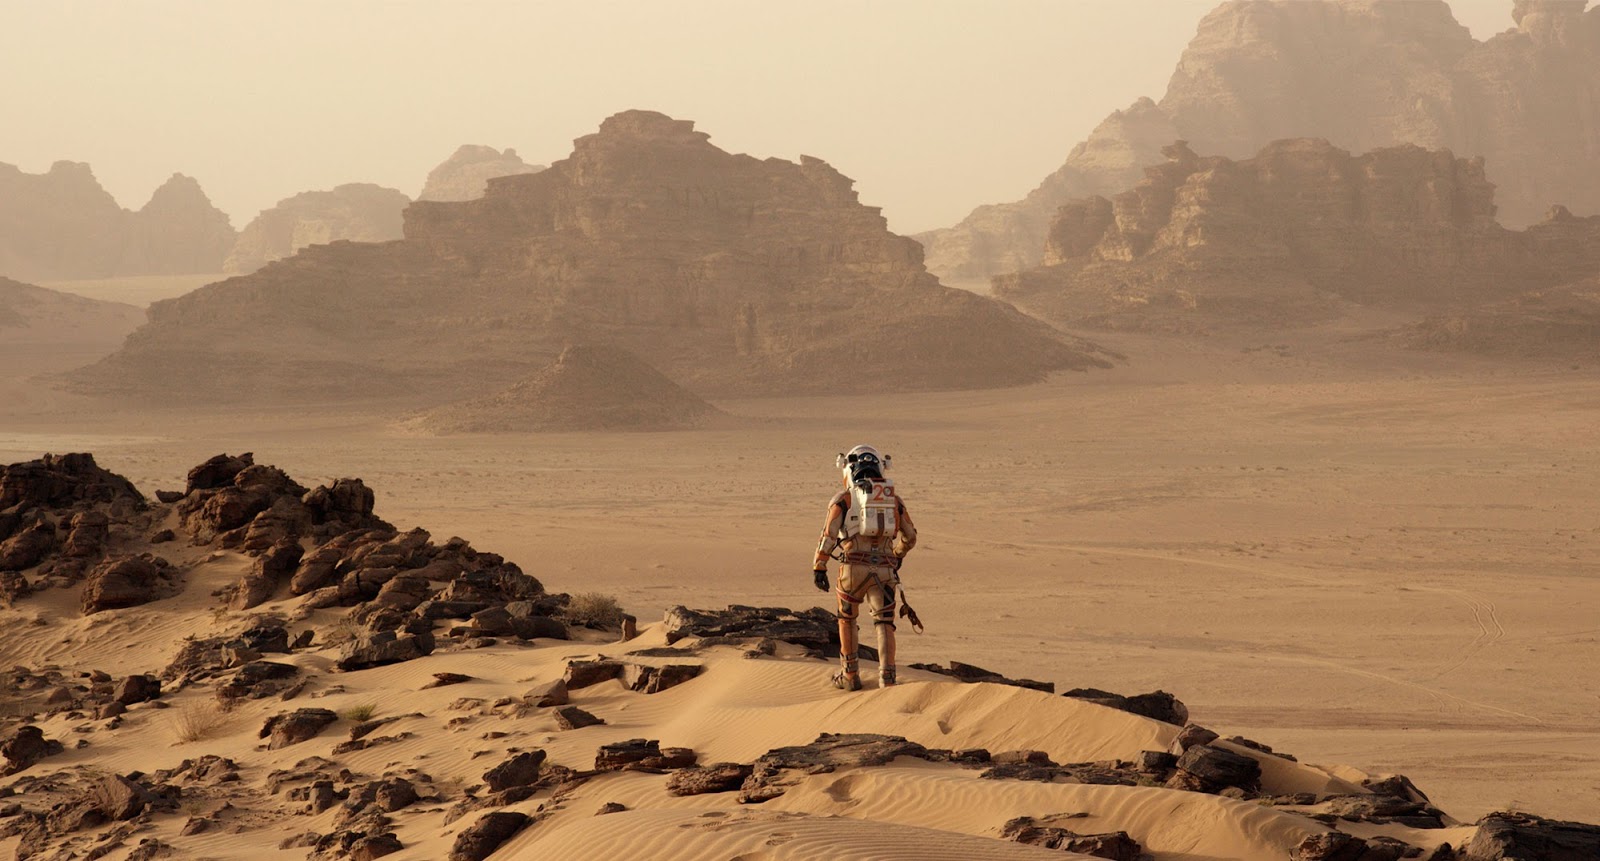 "The Martian เดอะ มาร์เชี่ยน กู้ตาย 140 ล้านไมล์"